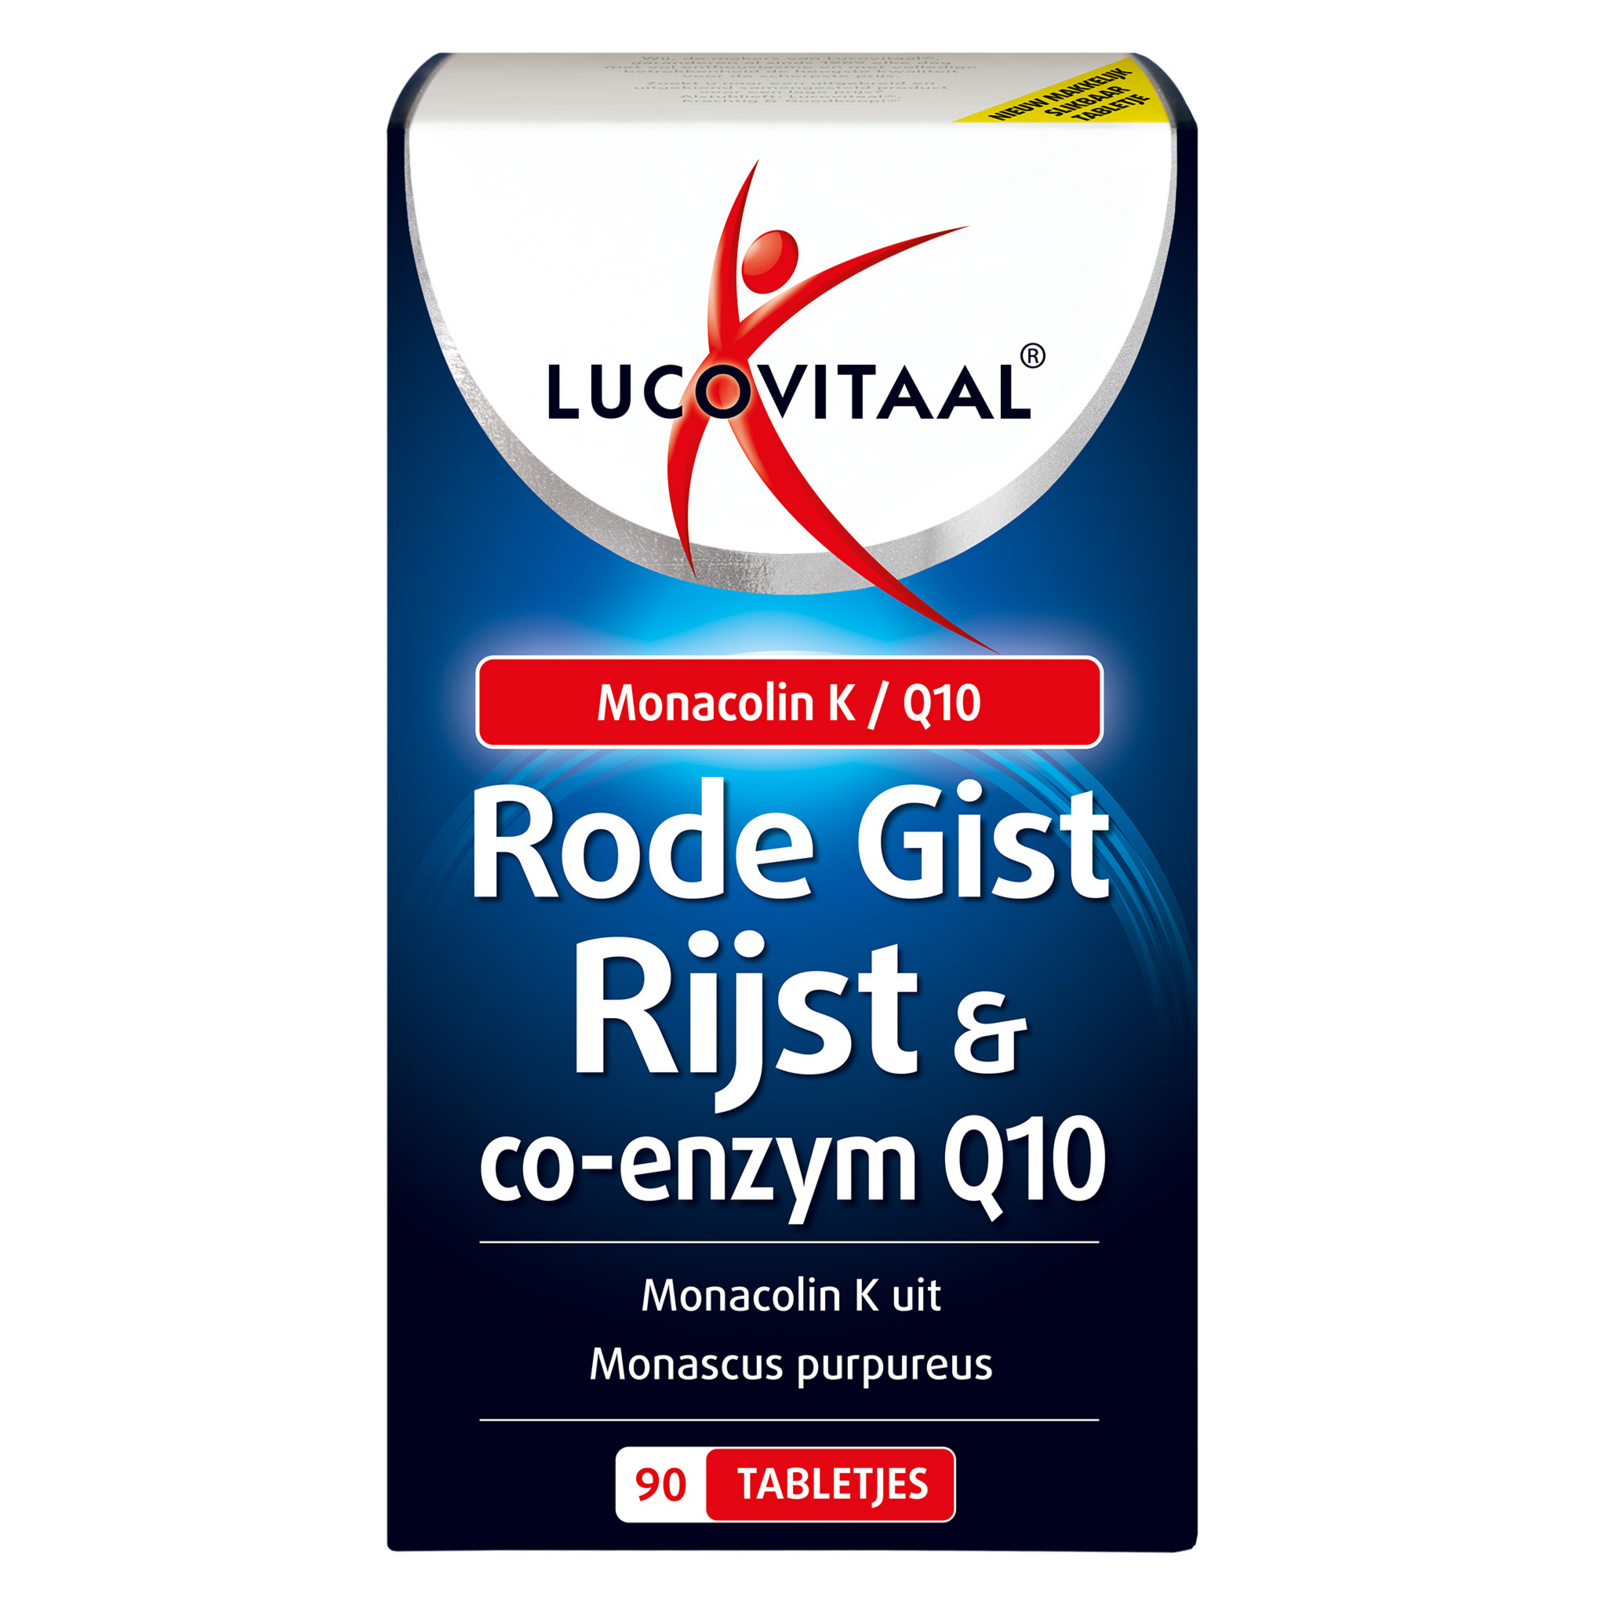 Lucovitaal Rode Gist Rijst & co-enzym Q10 Tabletten